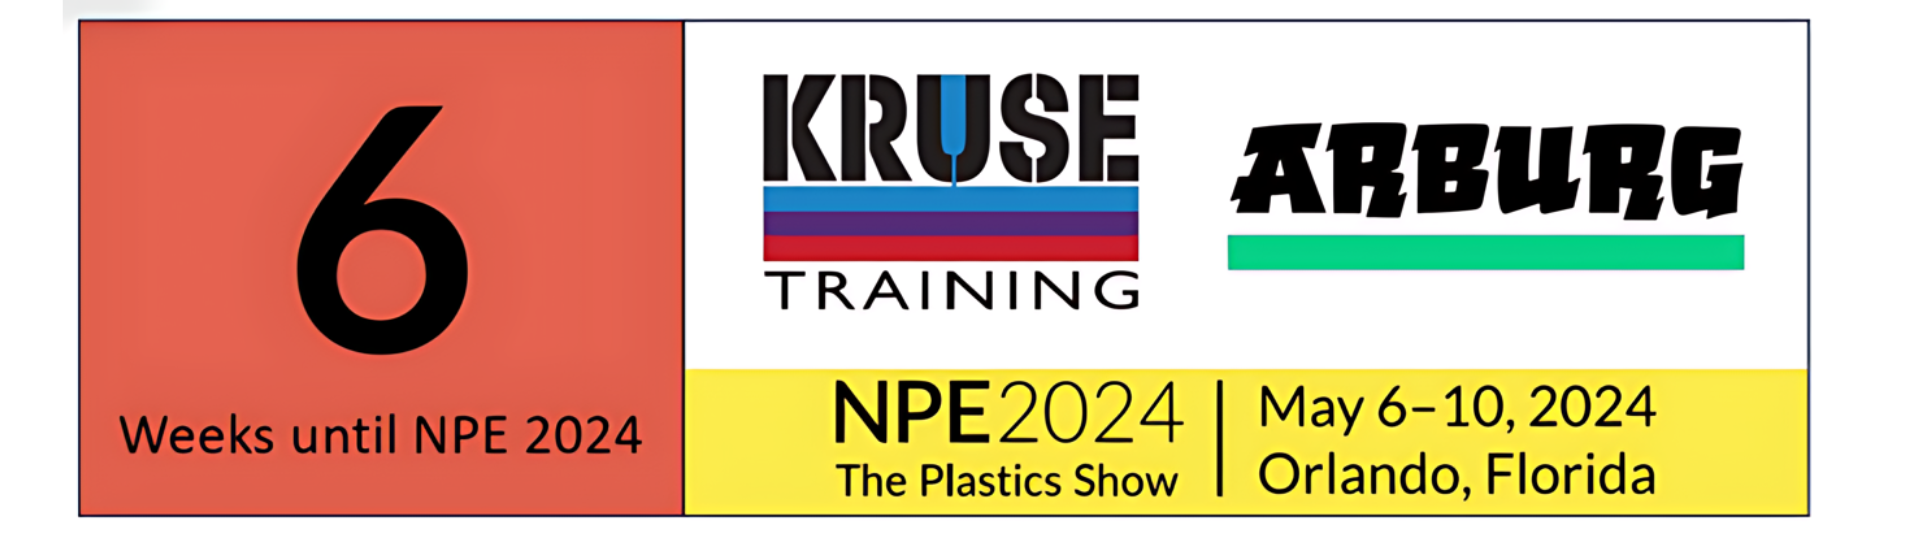 NPE2024-Learning-Digitalization-Kruse-and-ARBURG-logos